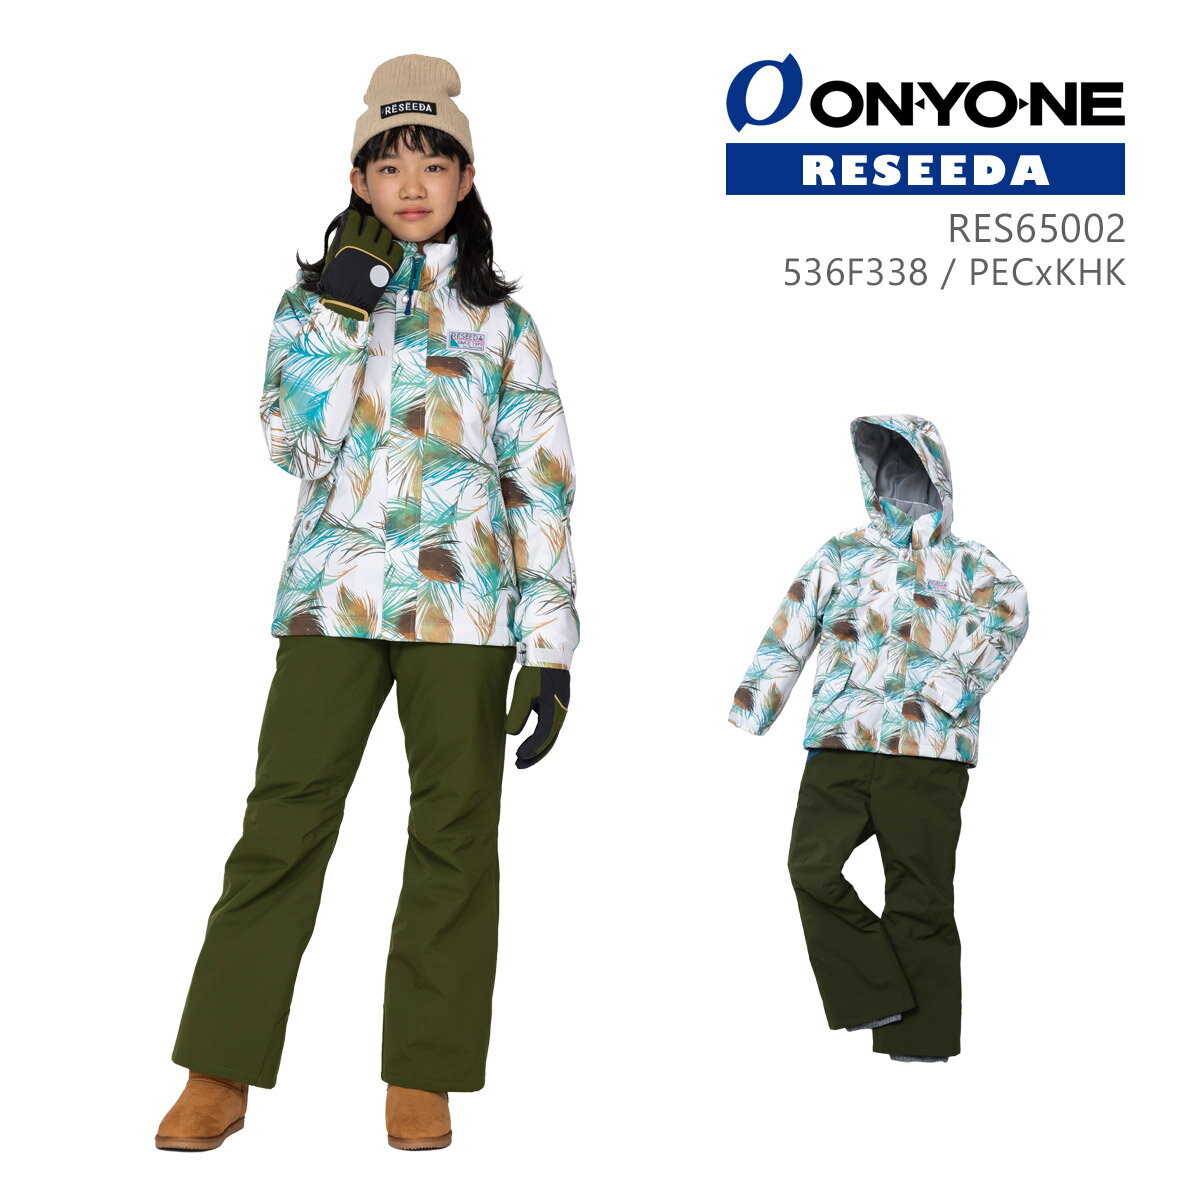 ONYONE RESEEDA(オンヨネ レセーダ) RES65002 JUNIOR SUIT ジュニア スキーウェア 上下セット 子供用 スノースーツ